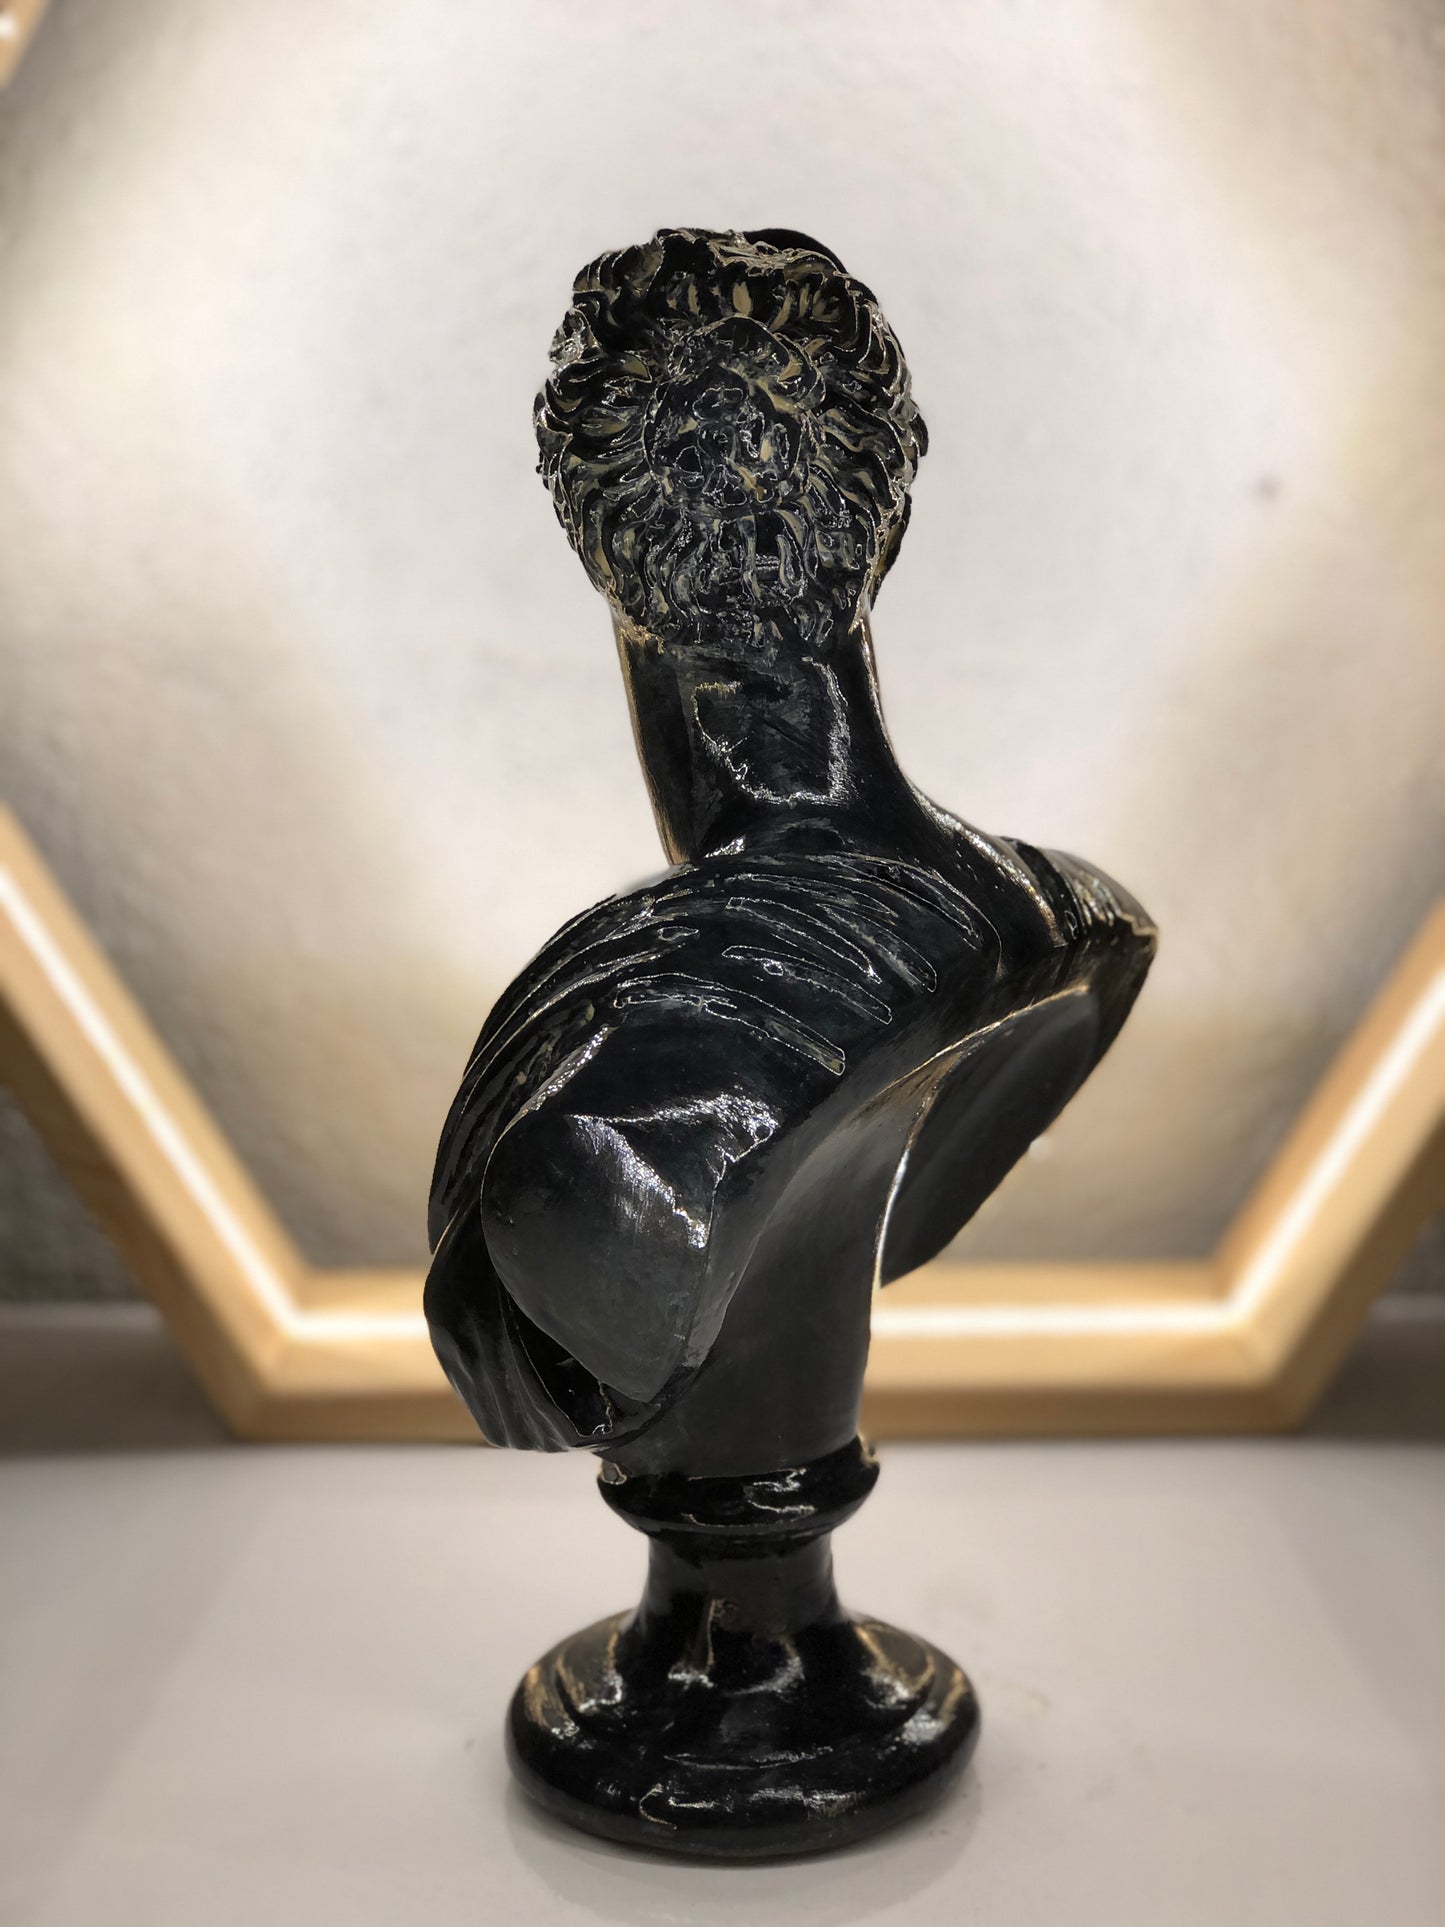 Artemis 'Black Pearl' Pop Art Sculpture, Modern Home Decor